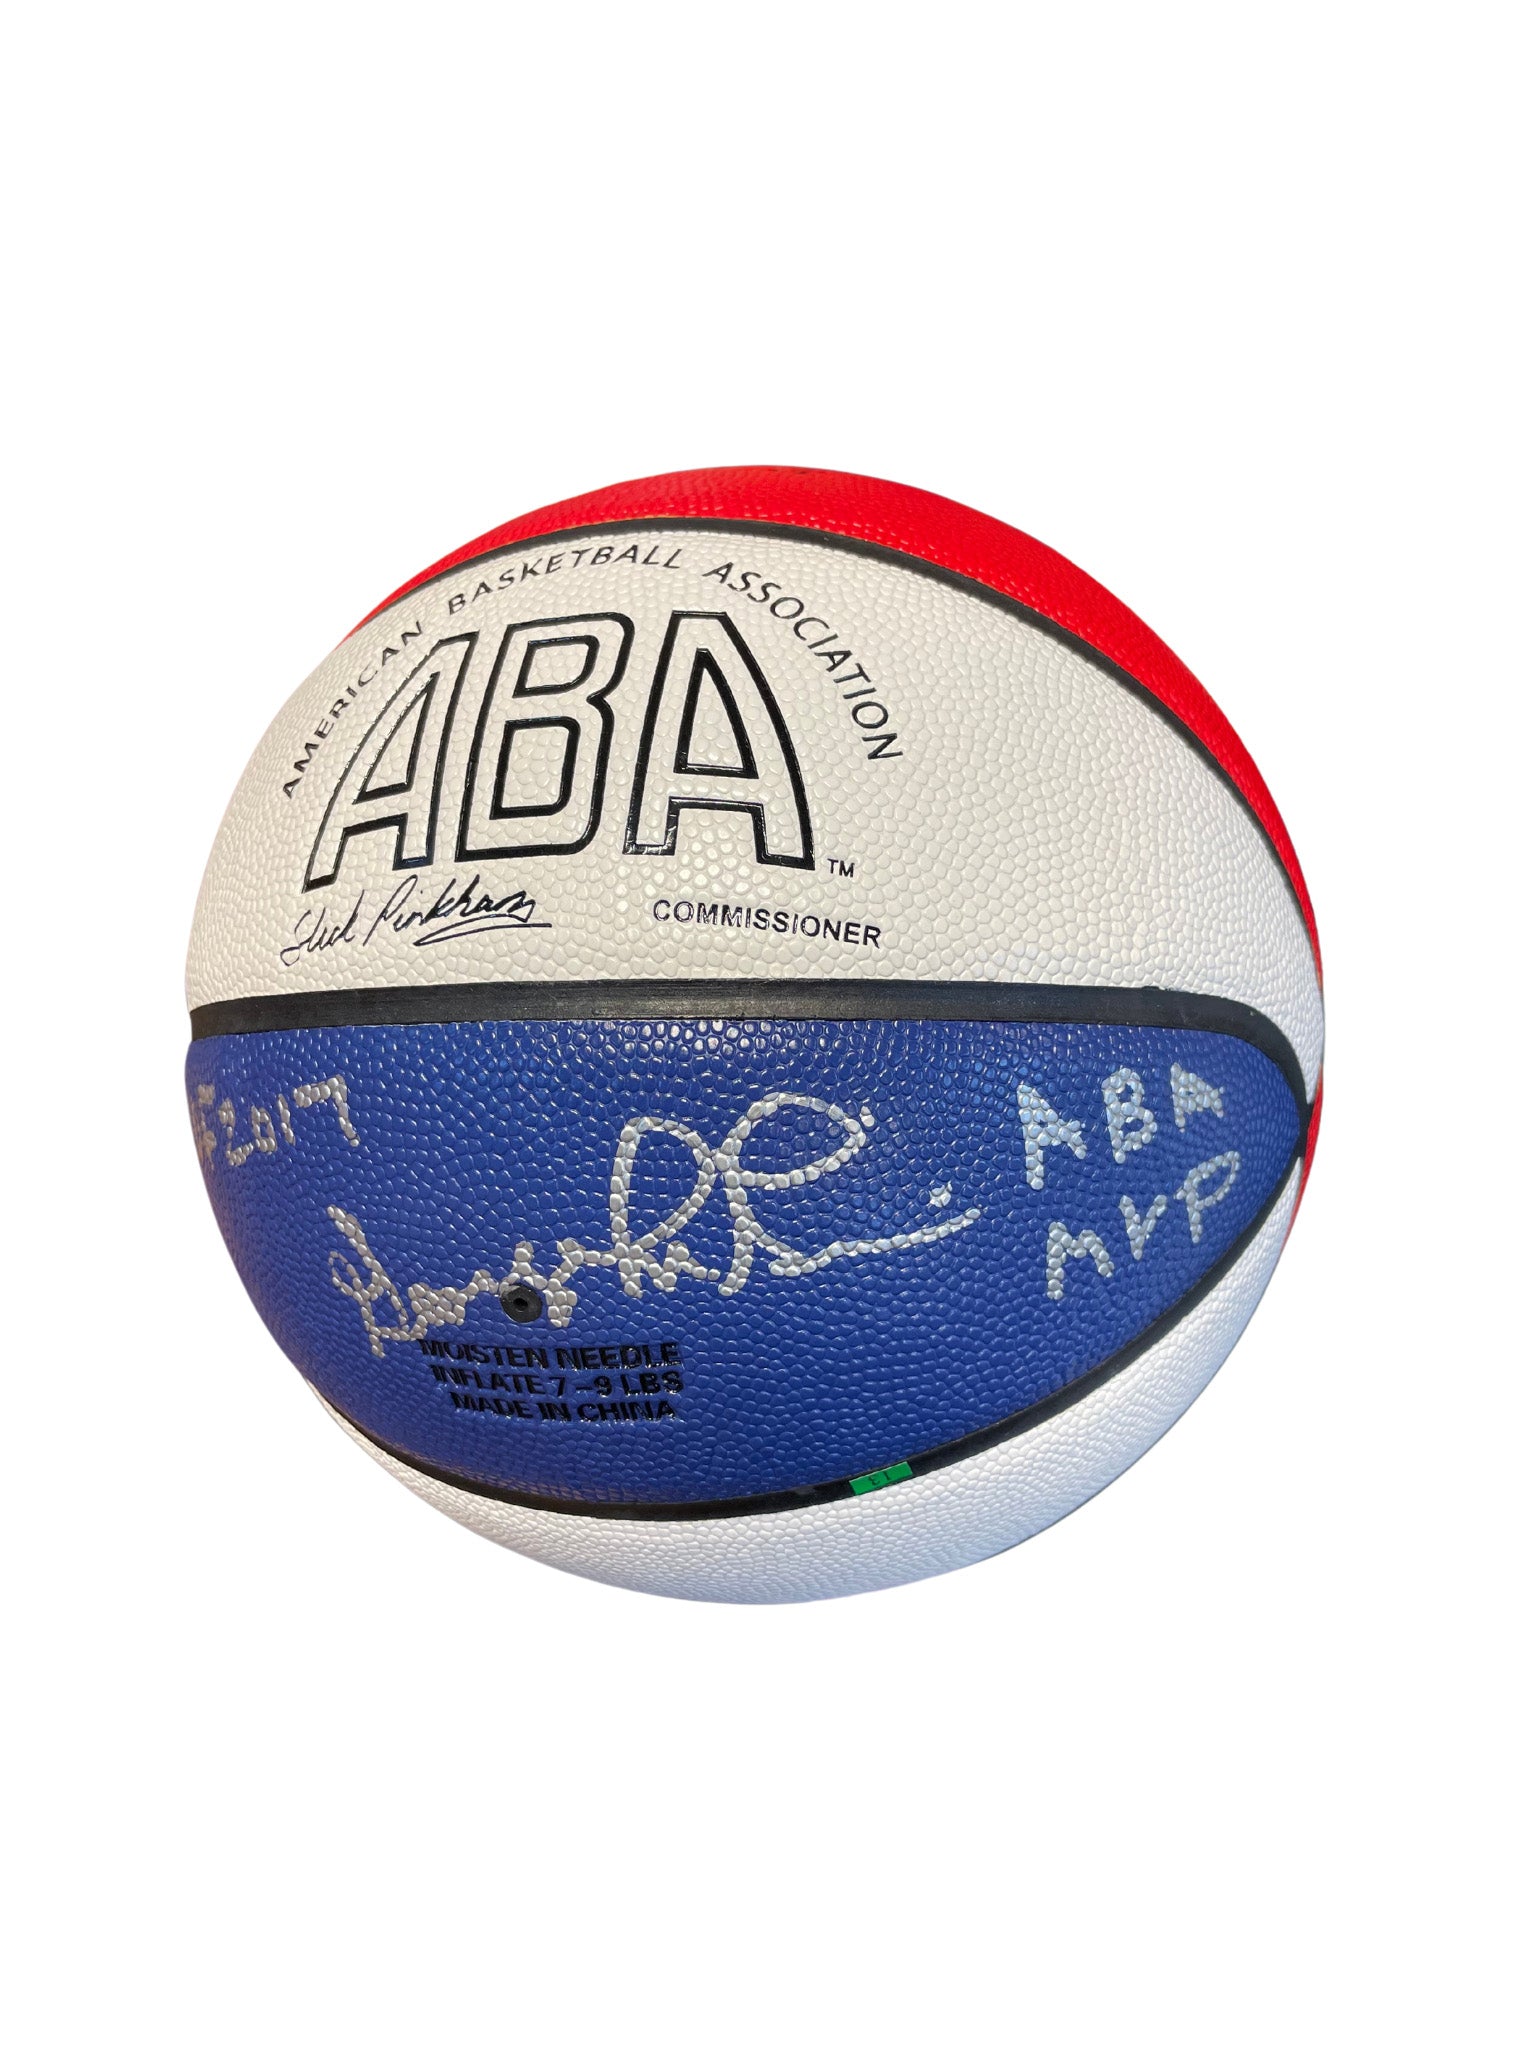 ABA Signature Series Basketball – George McGinnis